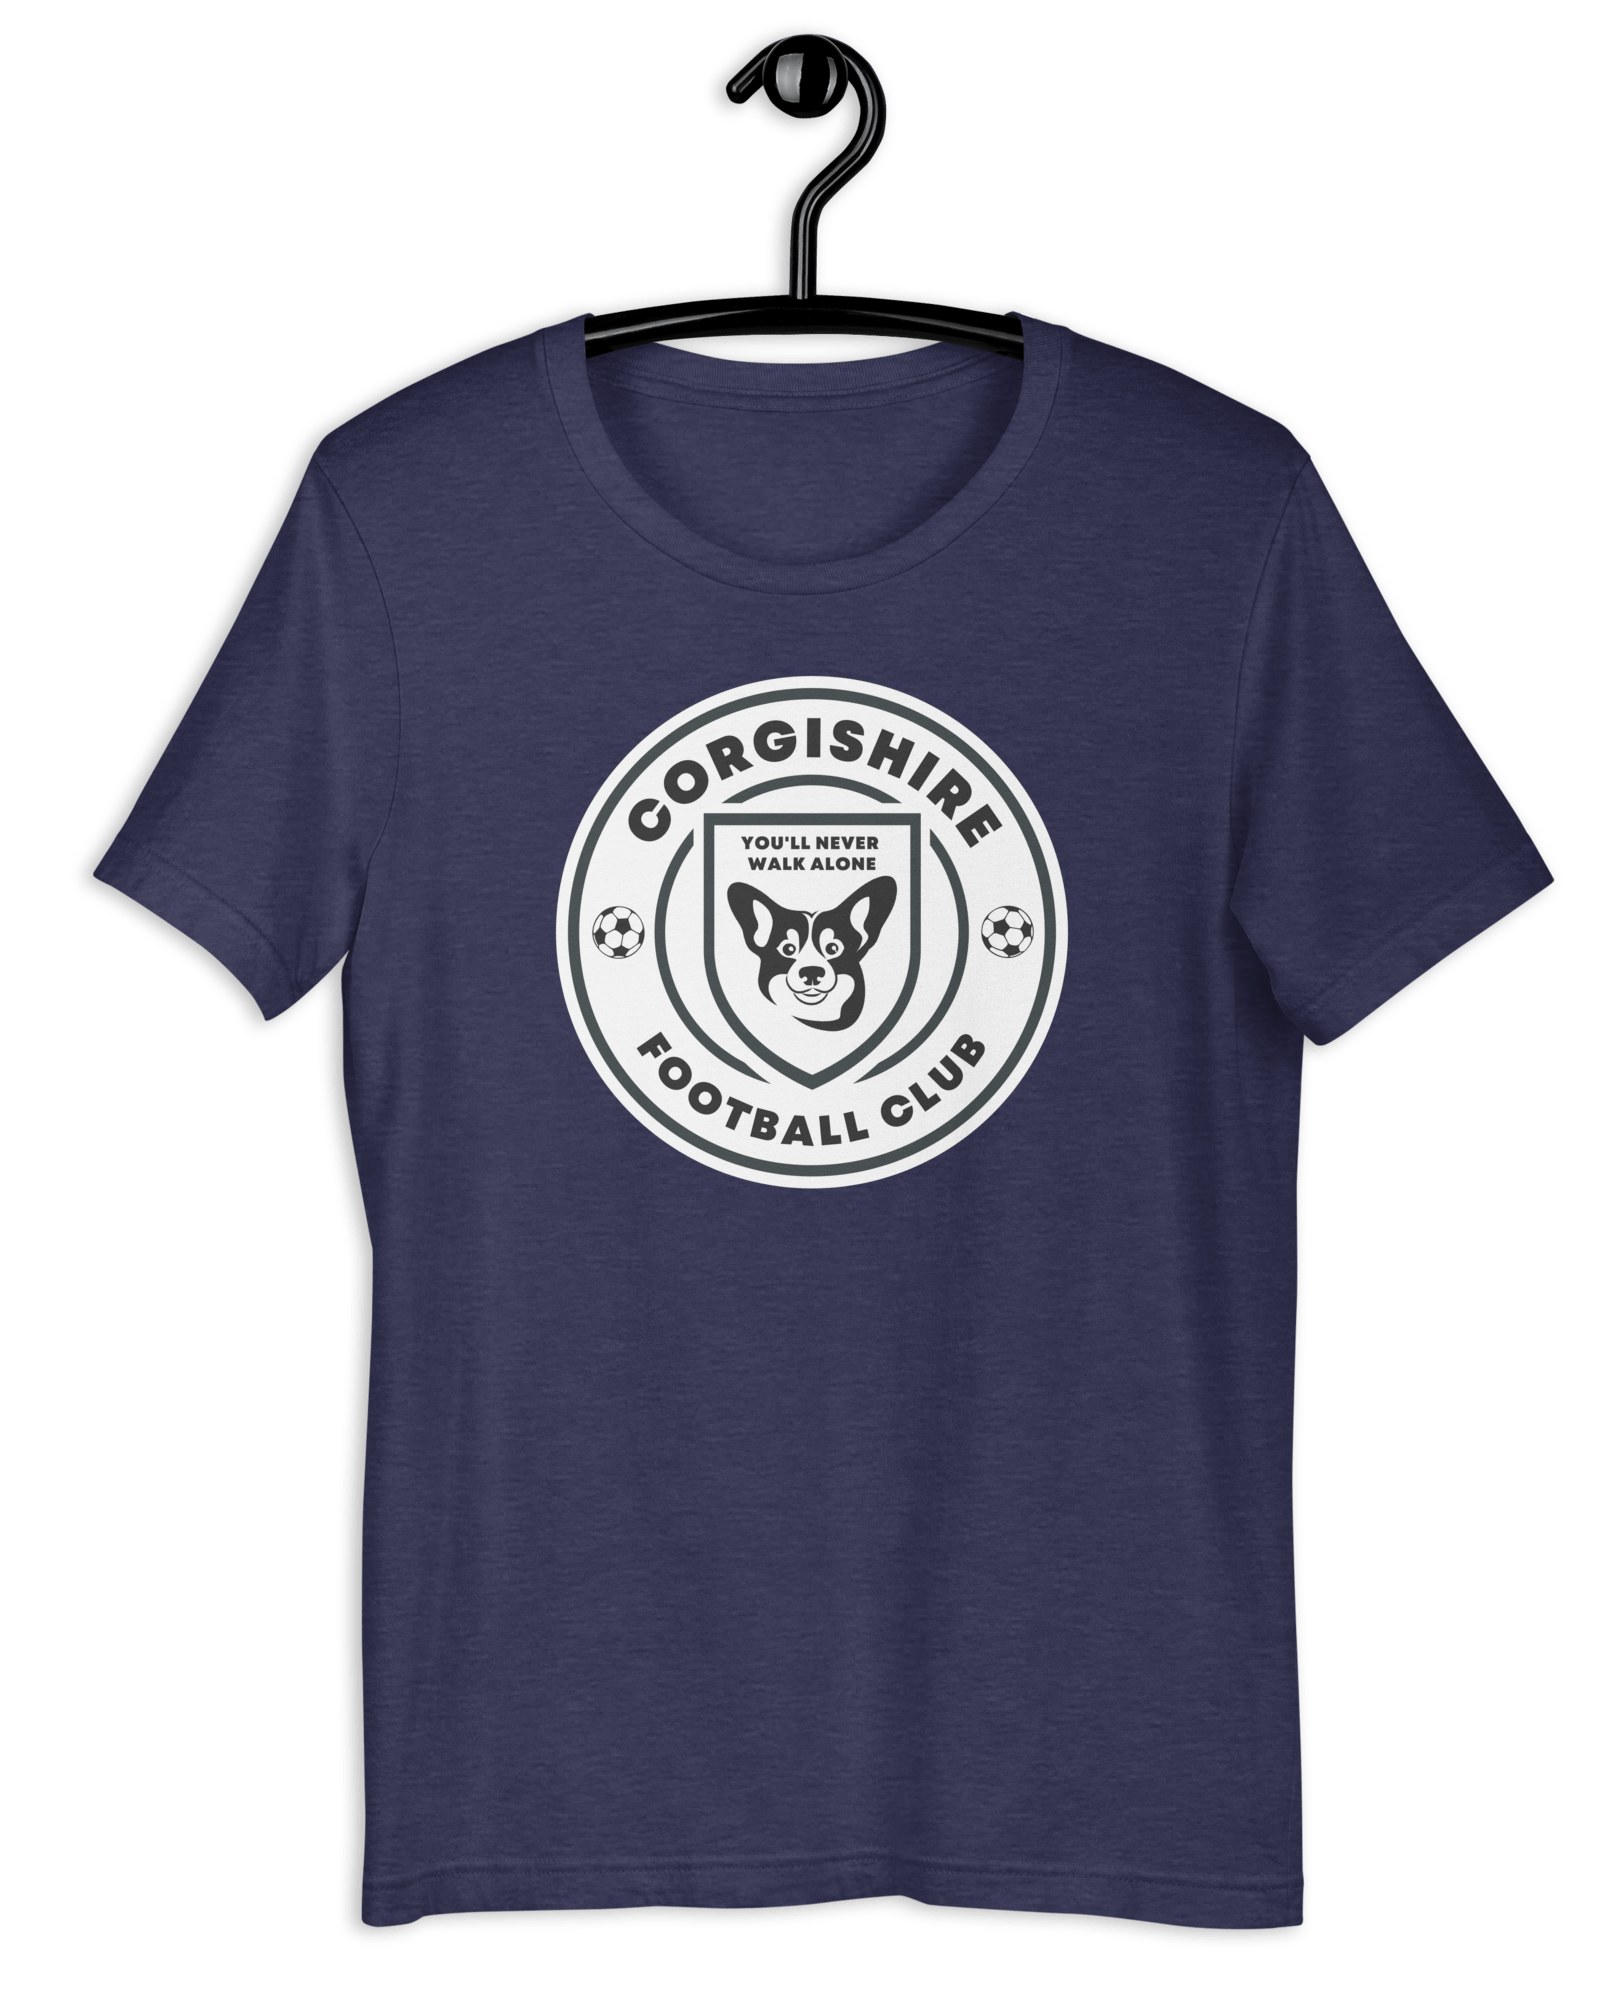 Corgishire FC T-shirt Heather Midnight Navy / S Shirts & Tops Jolly & Goode